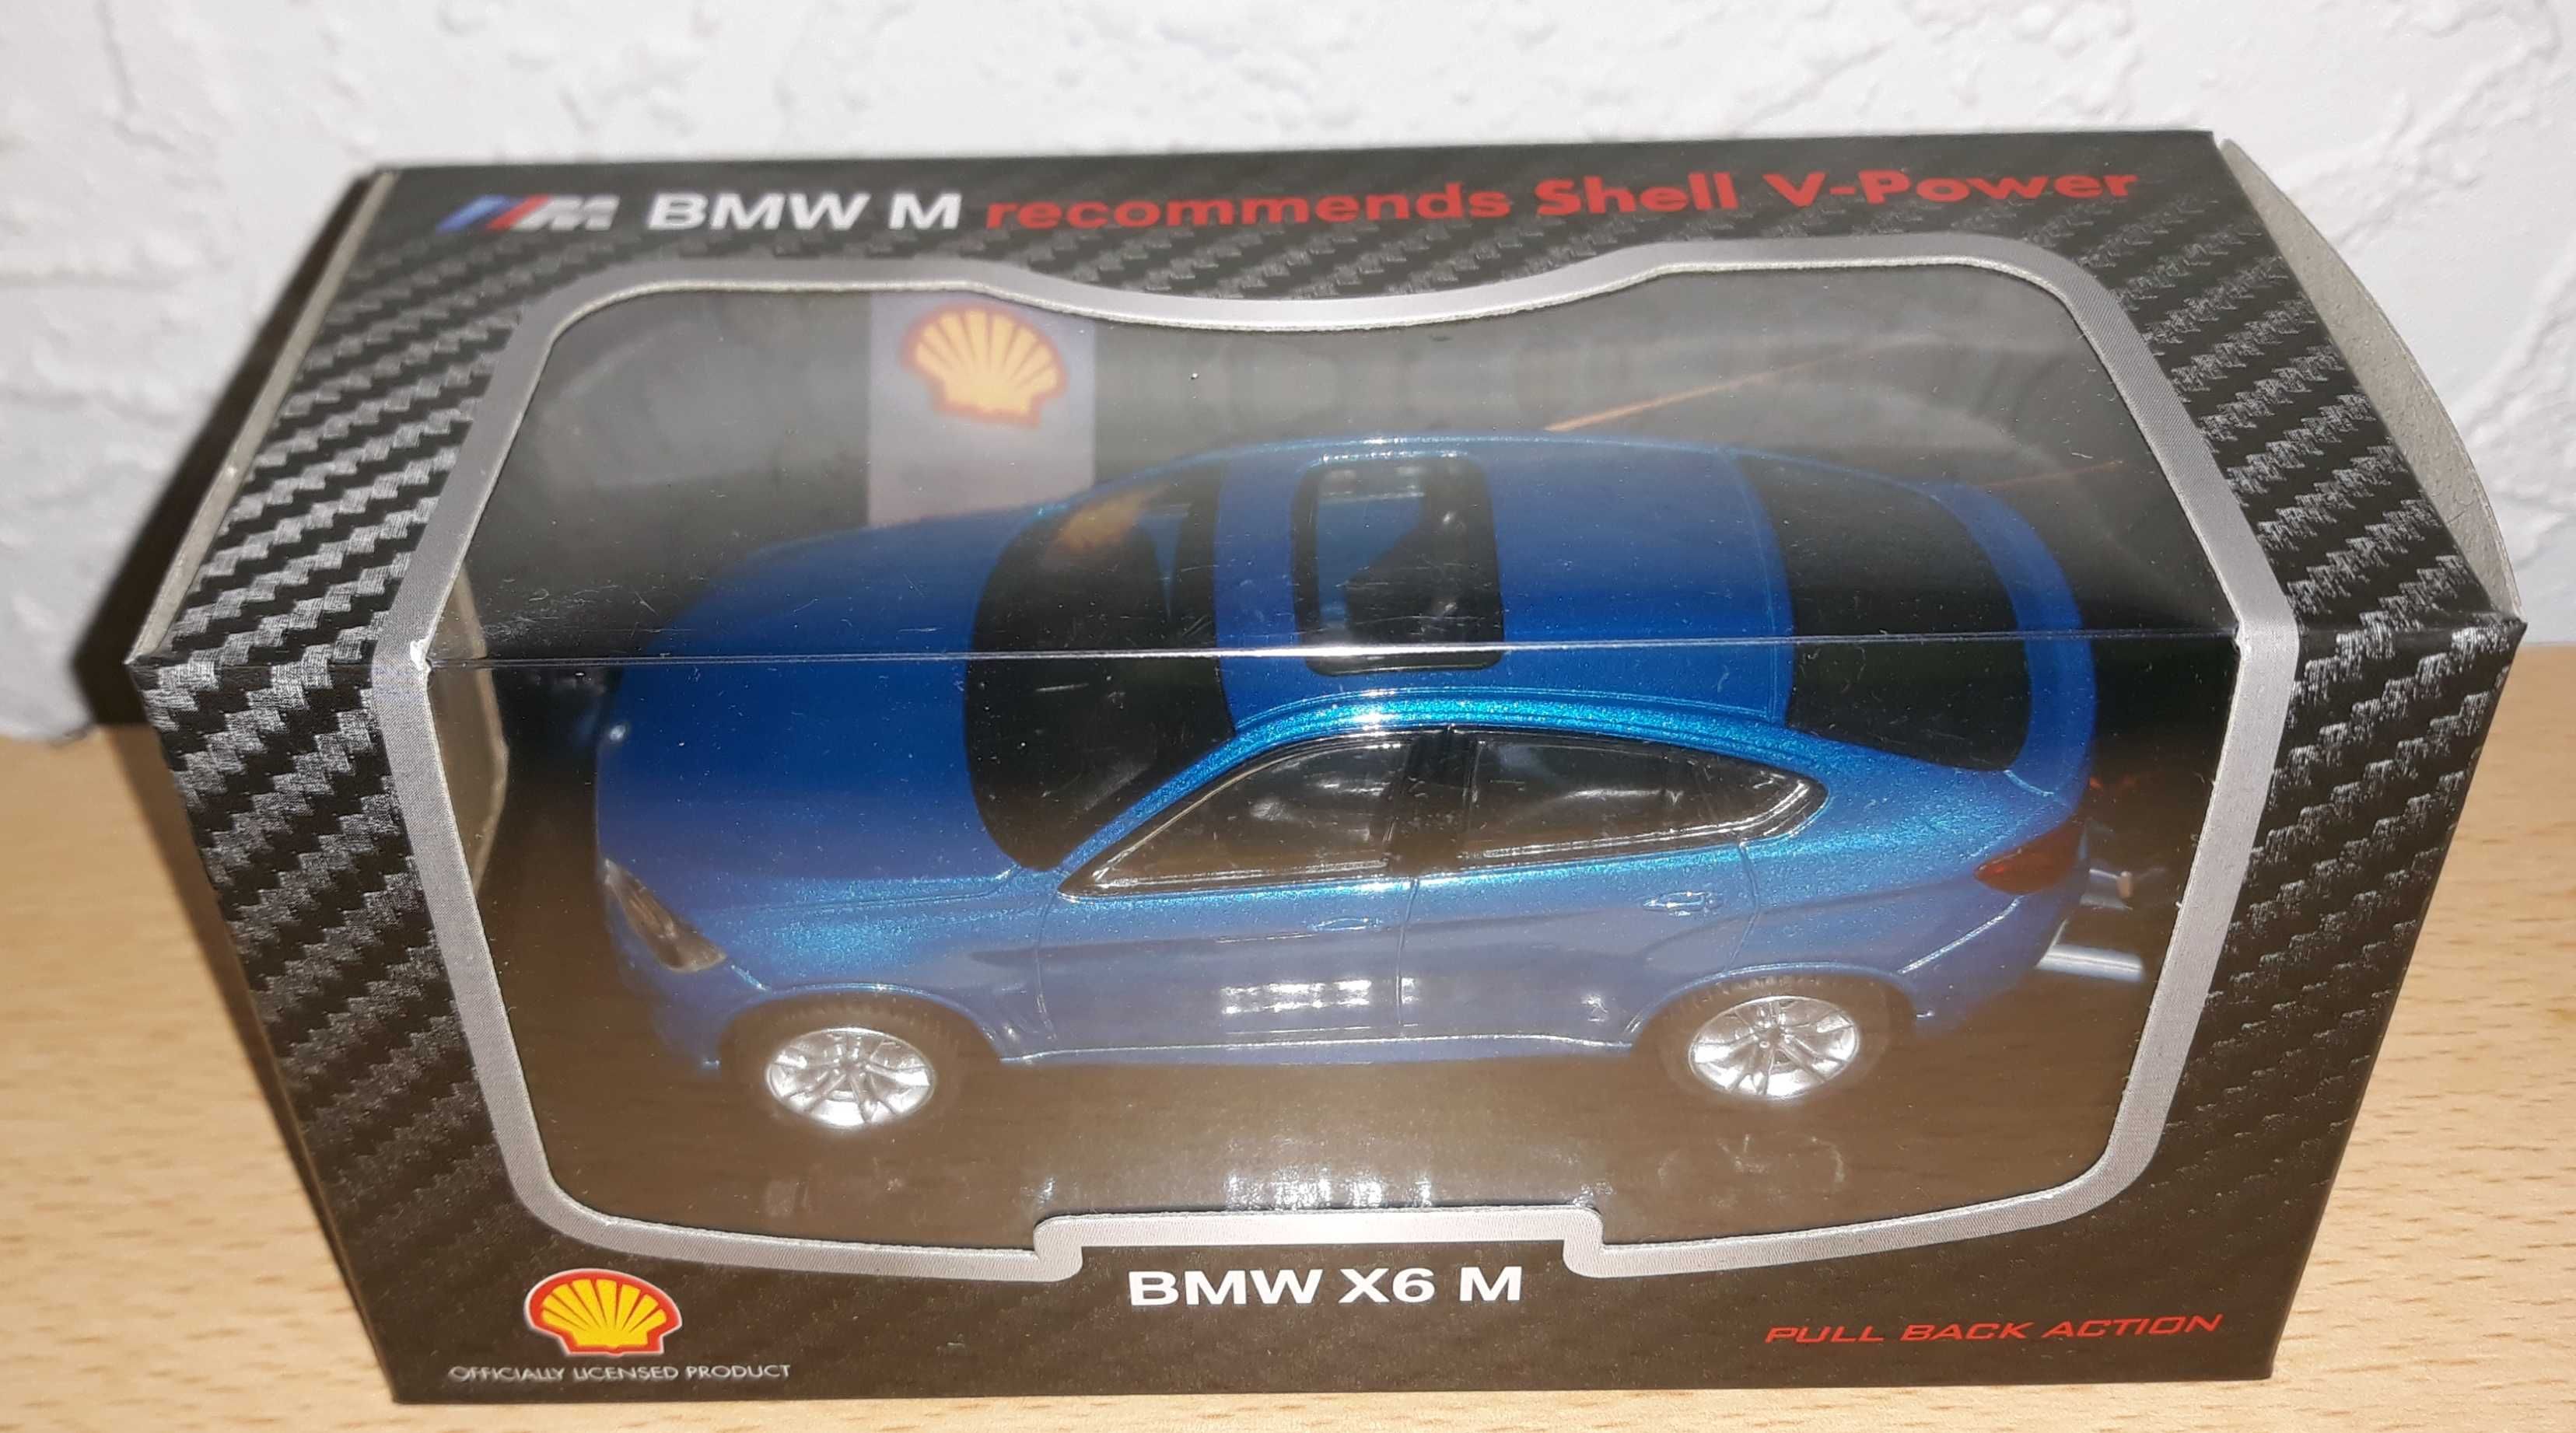 5 modeli samochodów BMW  Shell V-Power.